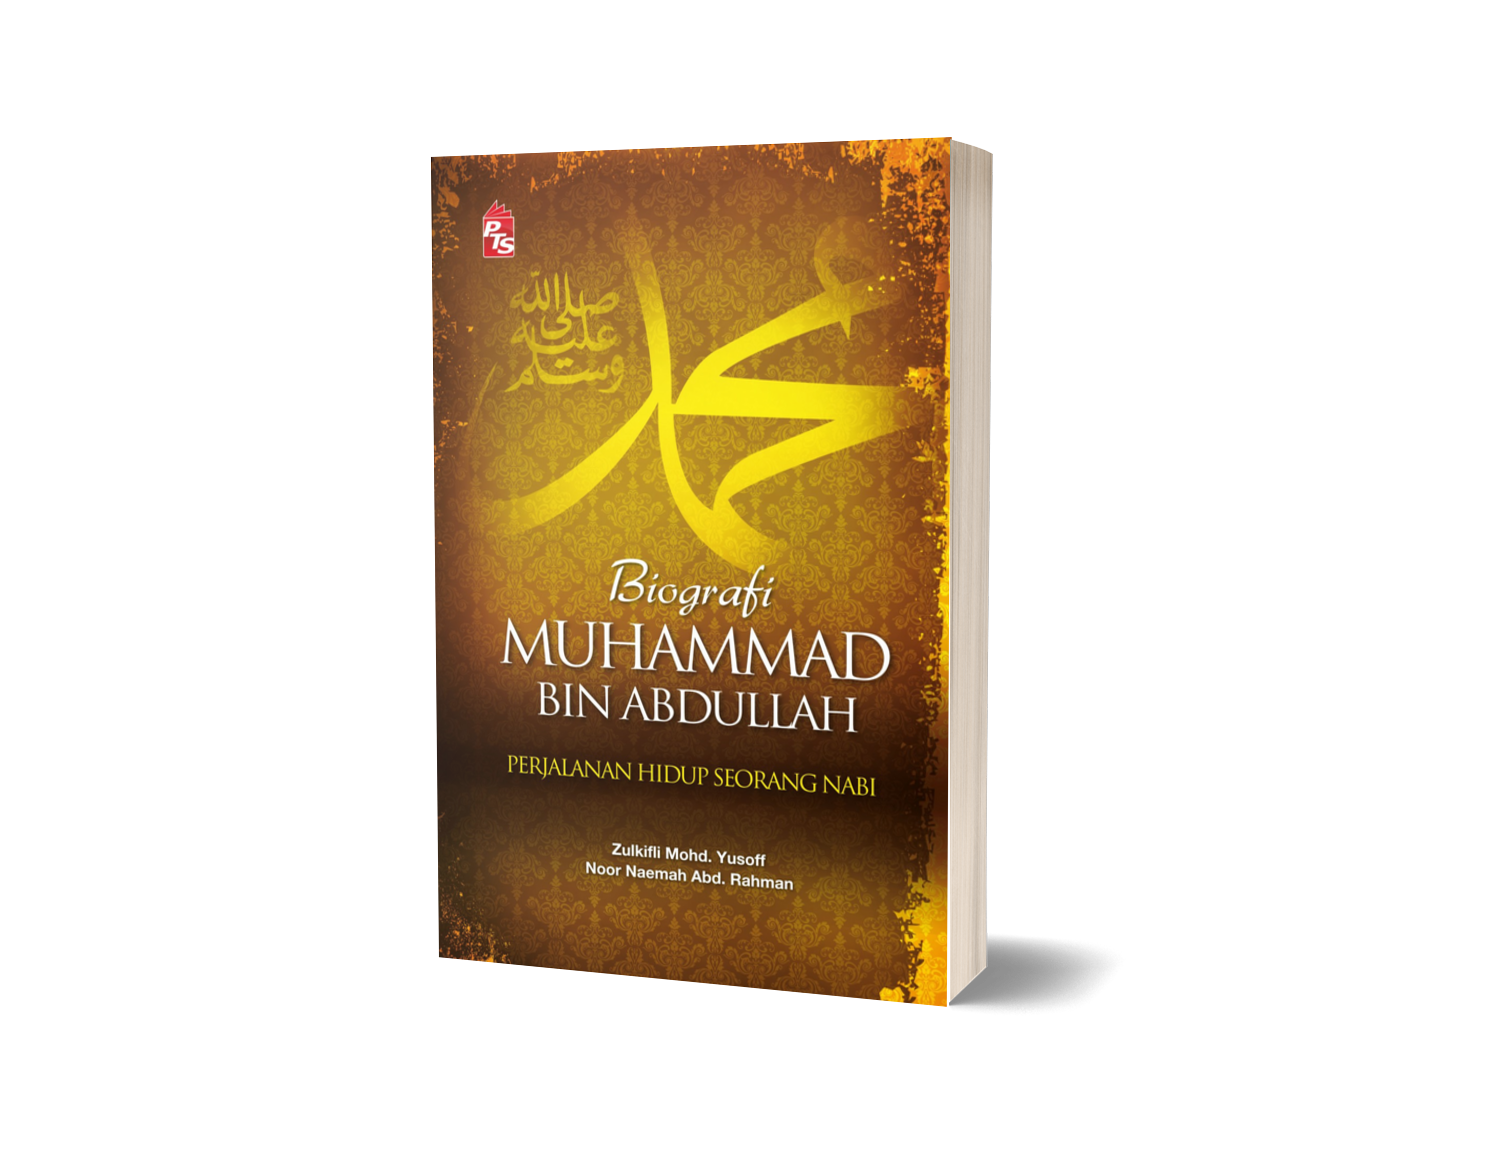 Biografi Muhammad bin Abdullah